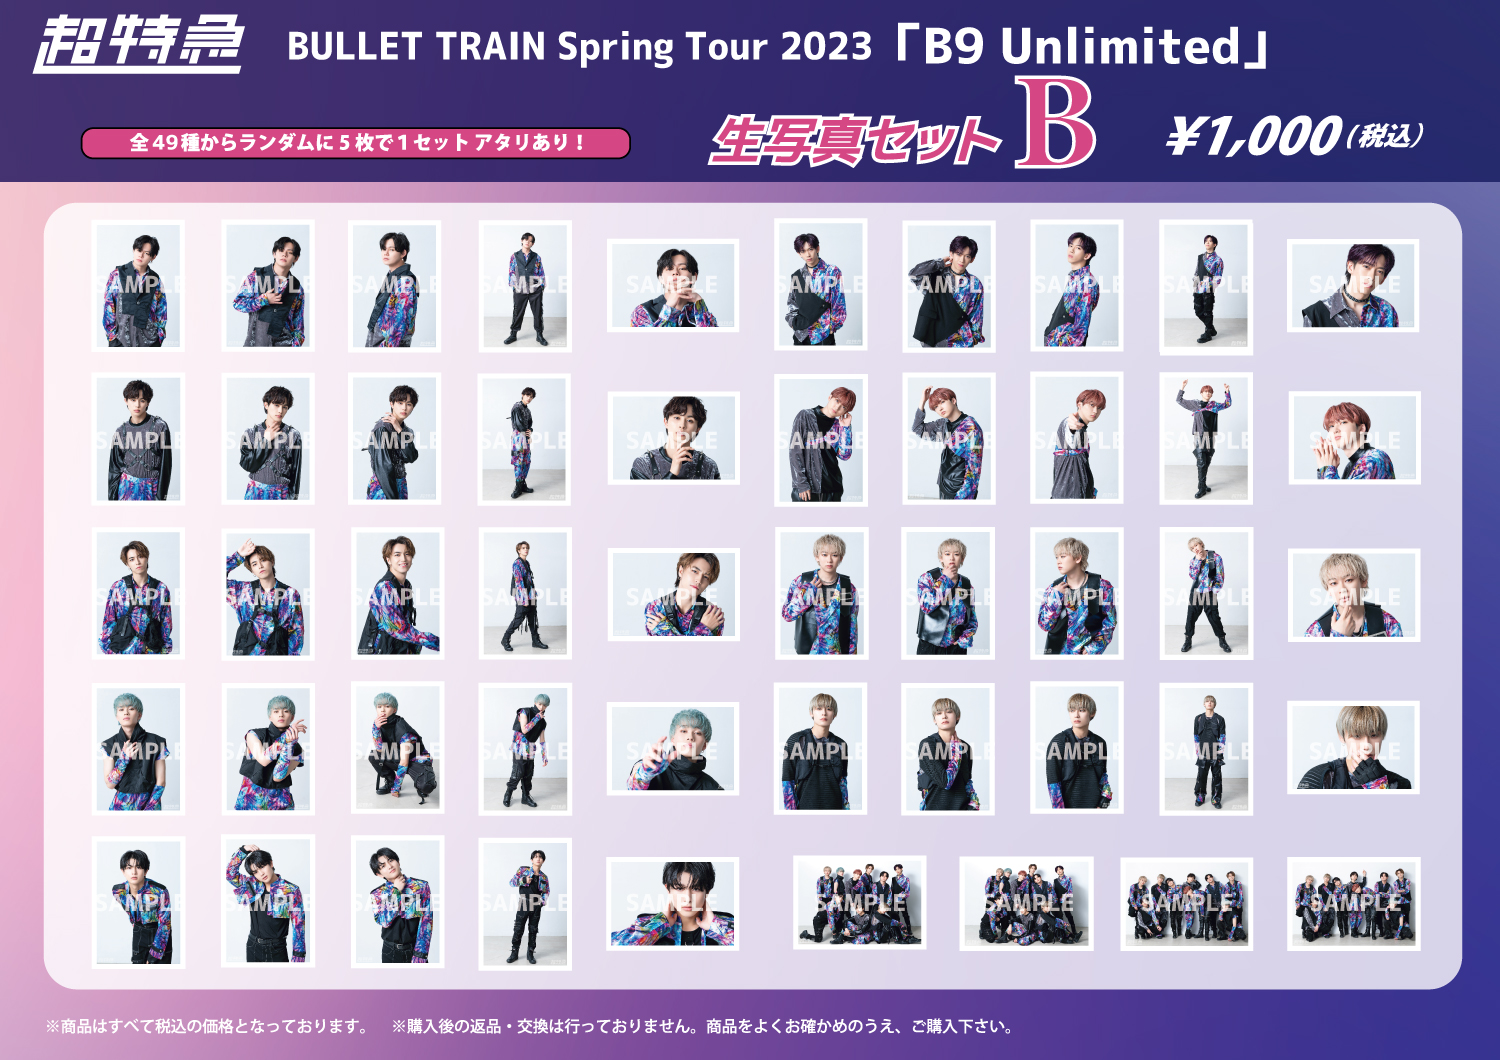 BULLET TRAIN Spring Tour 2023「B9 Unlimited」オフィシャルグッズ【6 